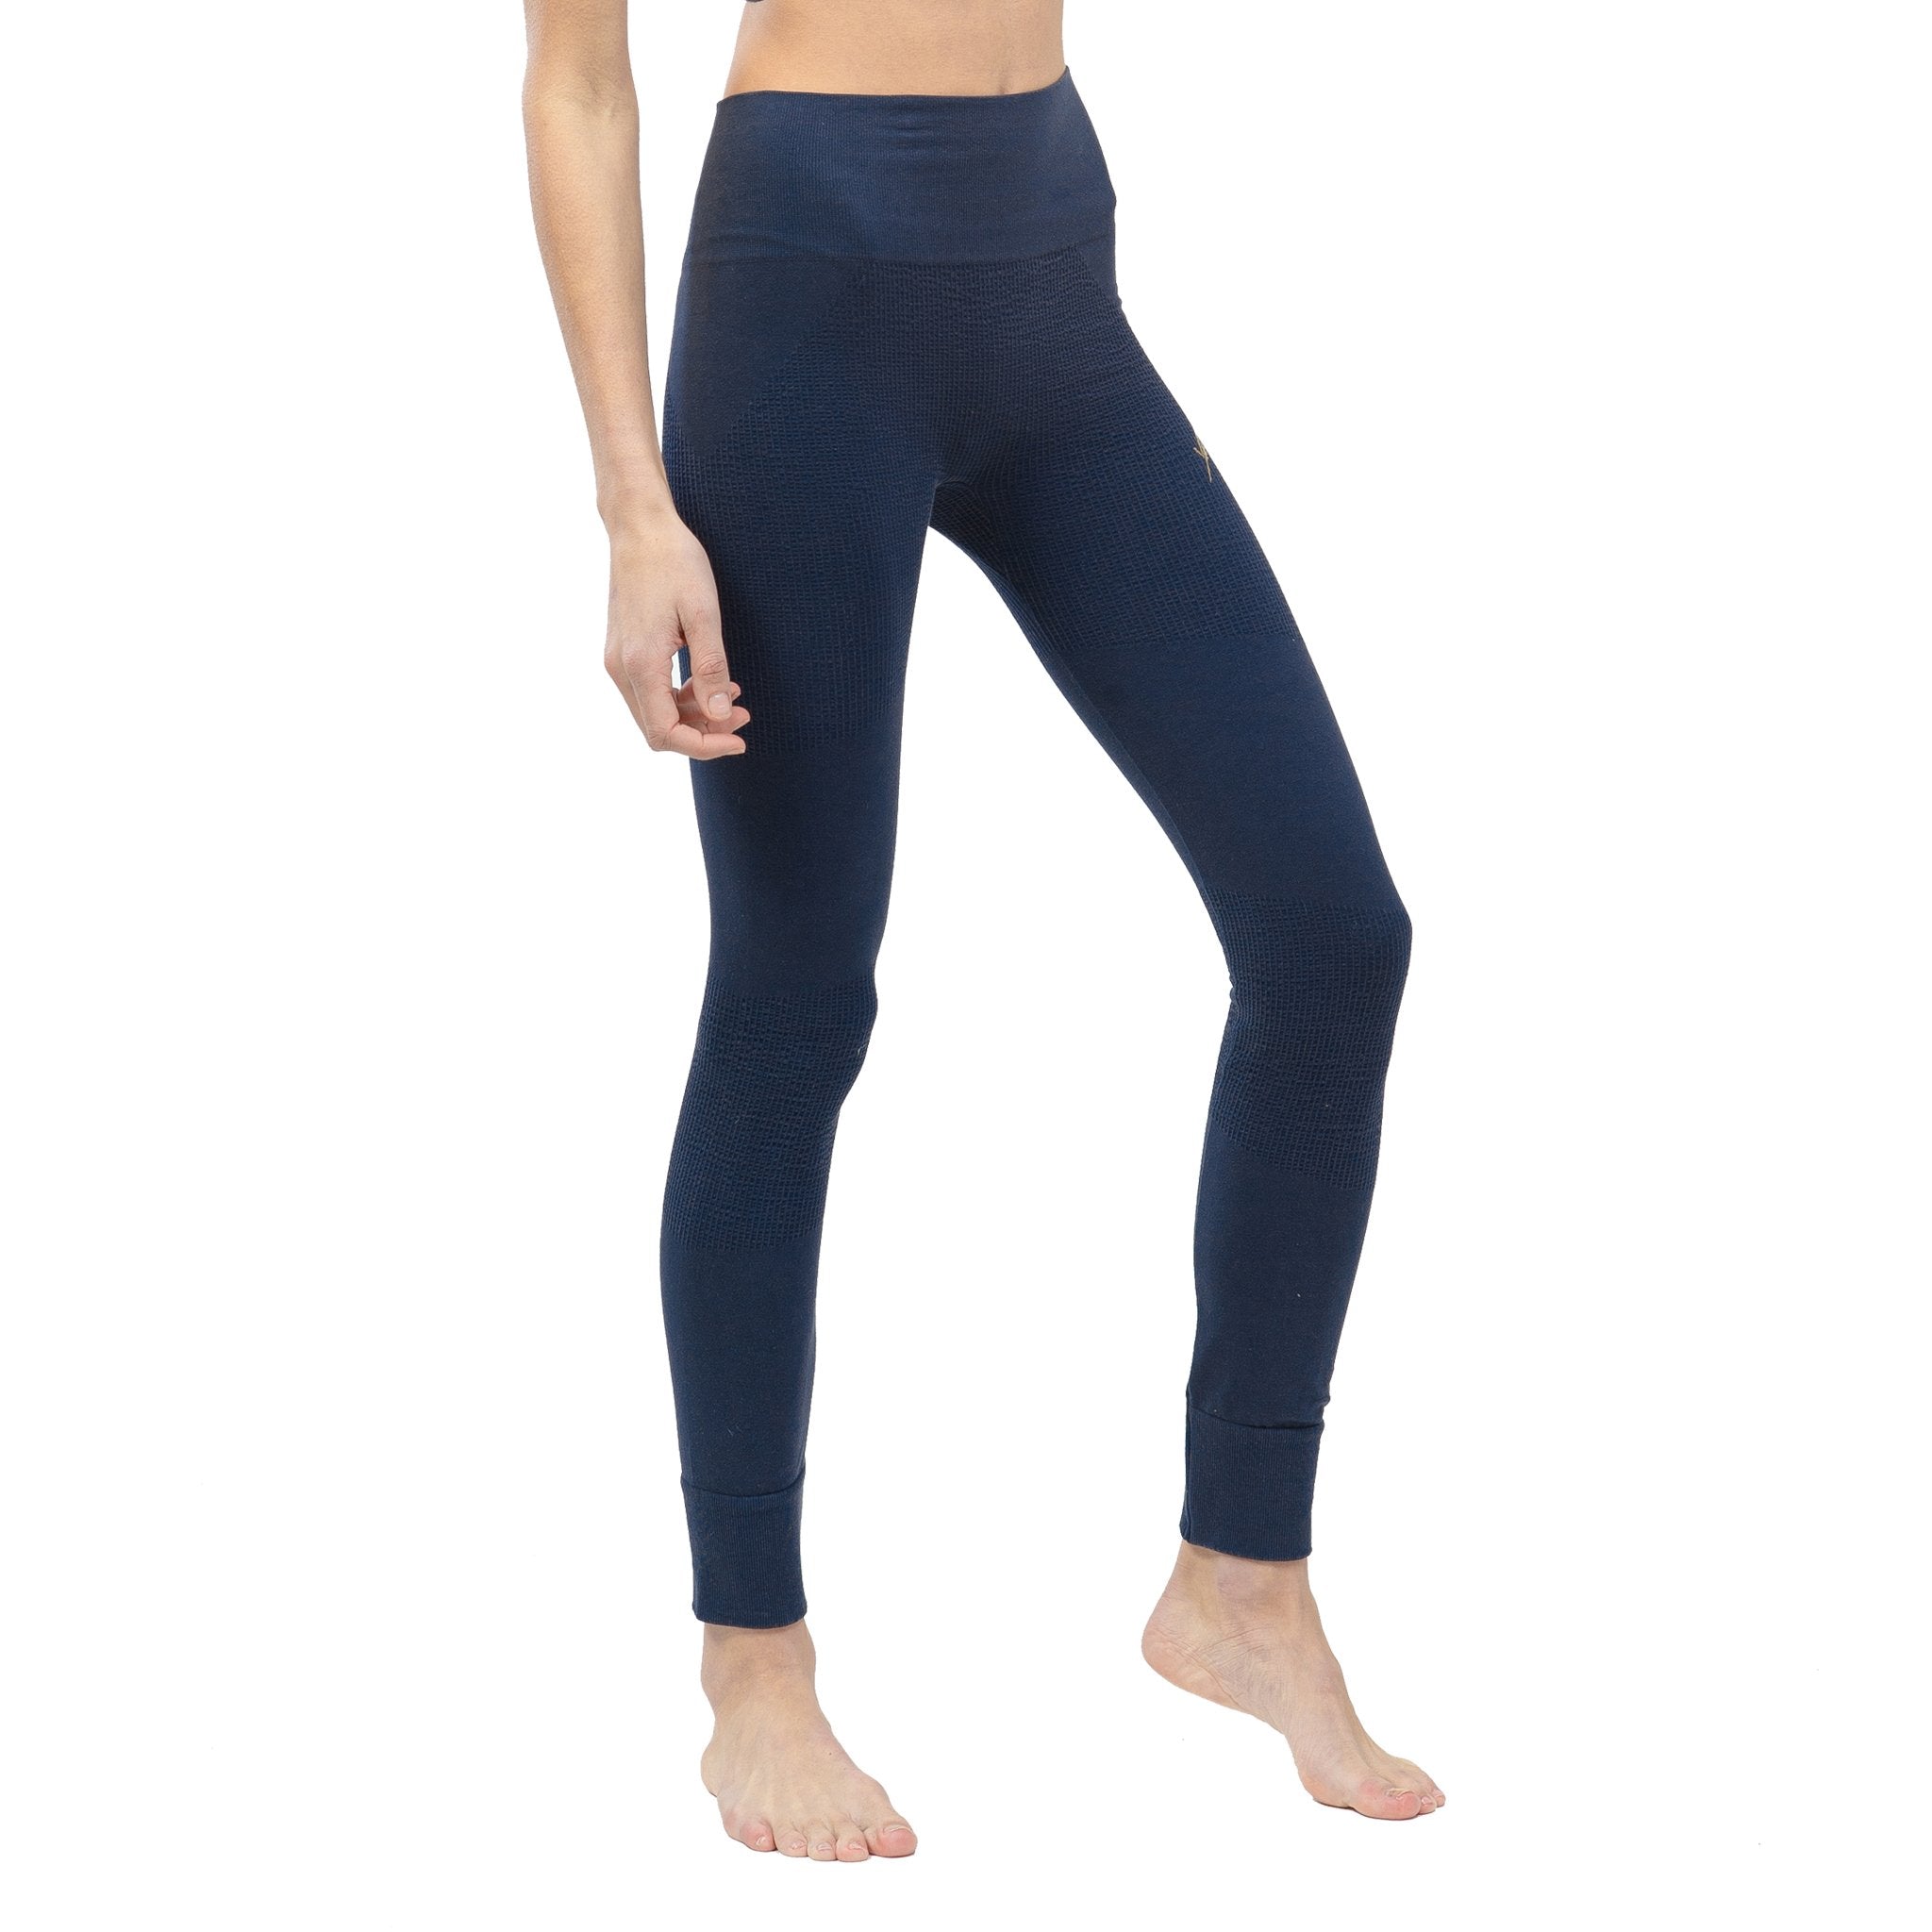 Legging yoga femme bleu coton bio Kar Navy - Vêtement éco-responsable